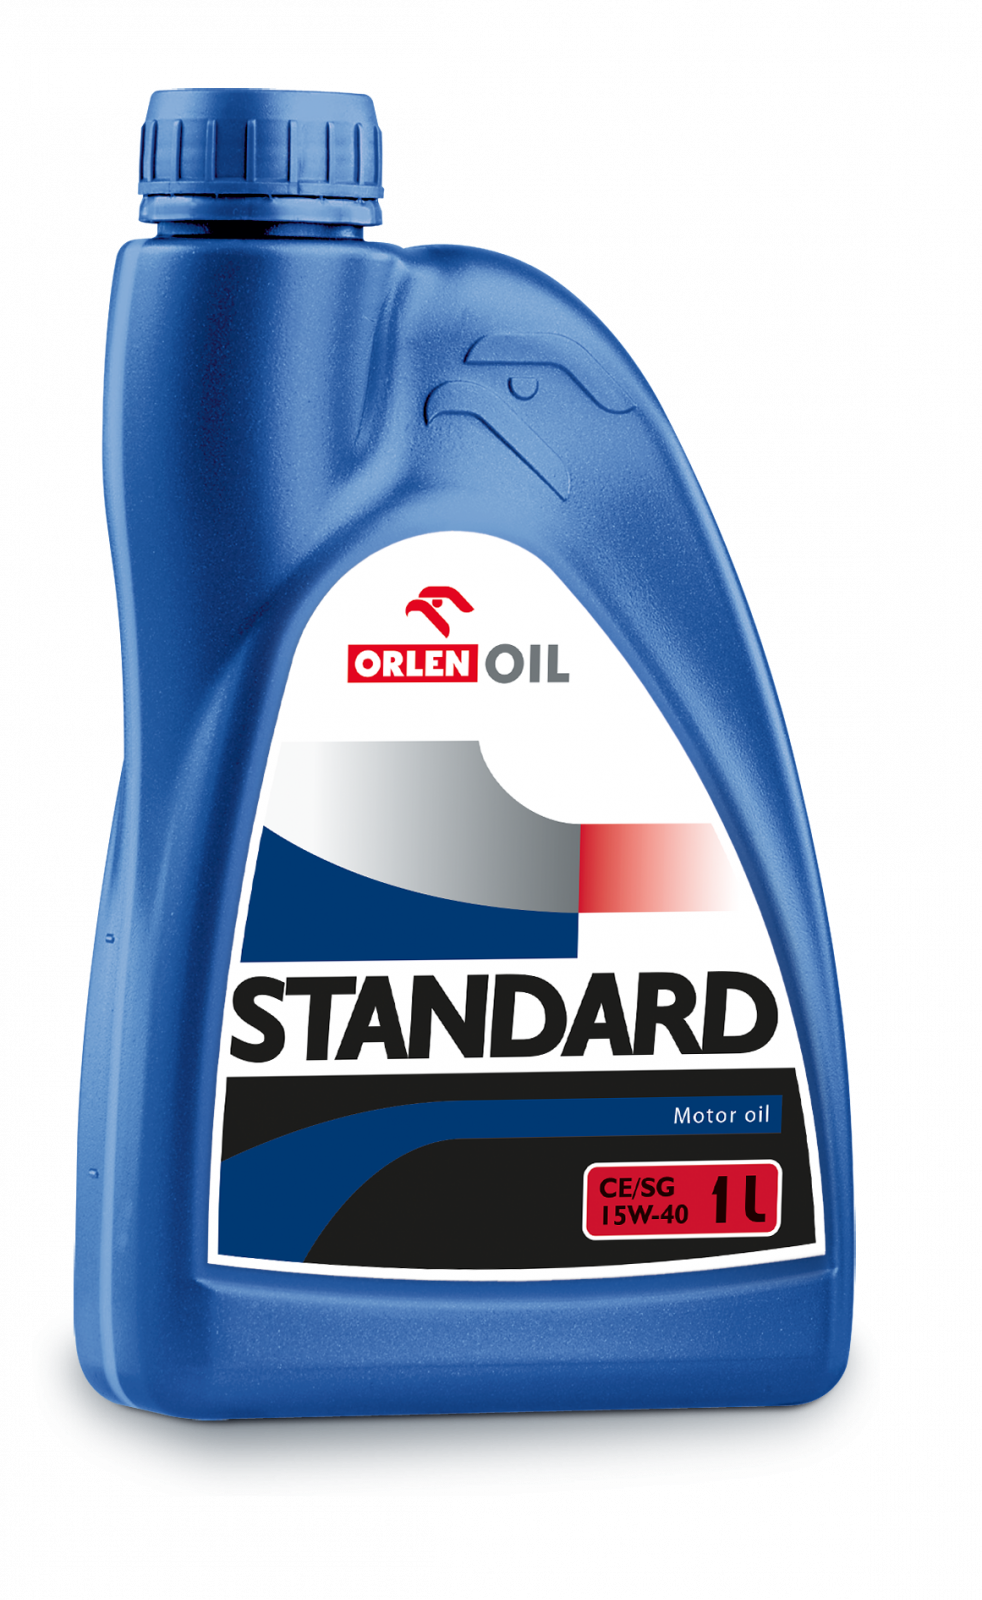 ORLEN OIL STANDARD CE/SG 15W-40 5l